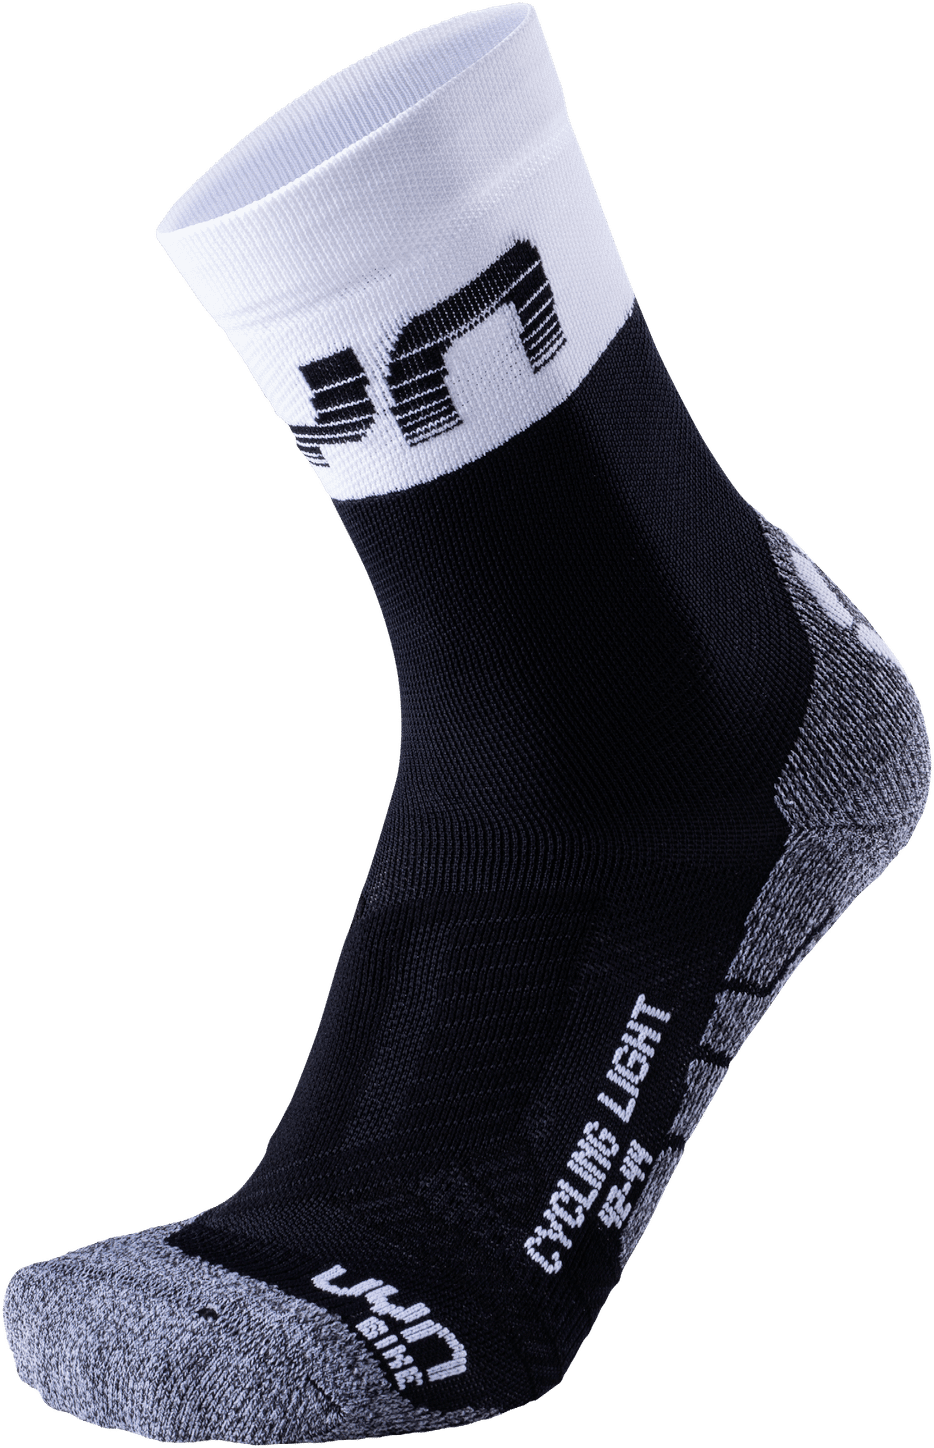 Uyn Light - Cycling socks - Men's